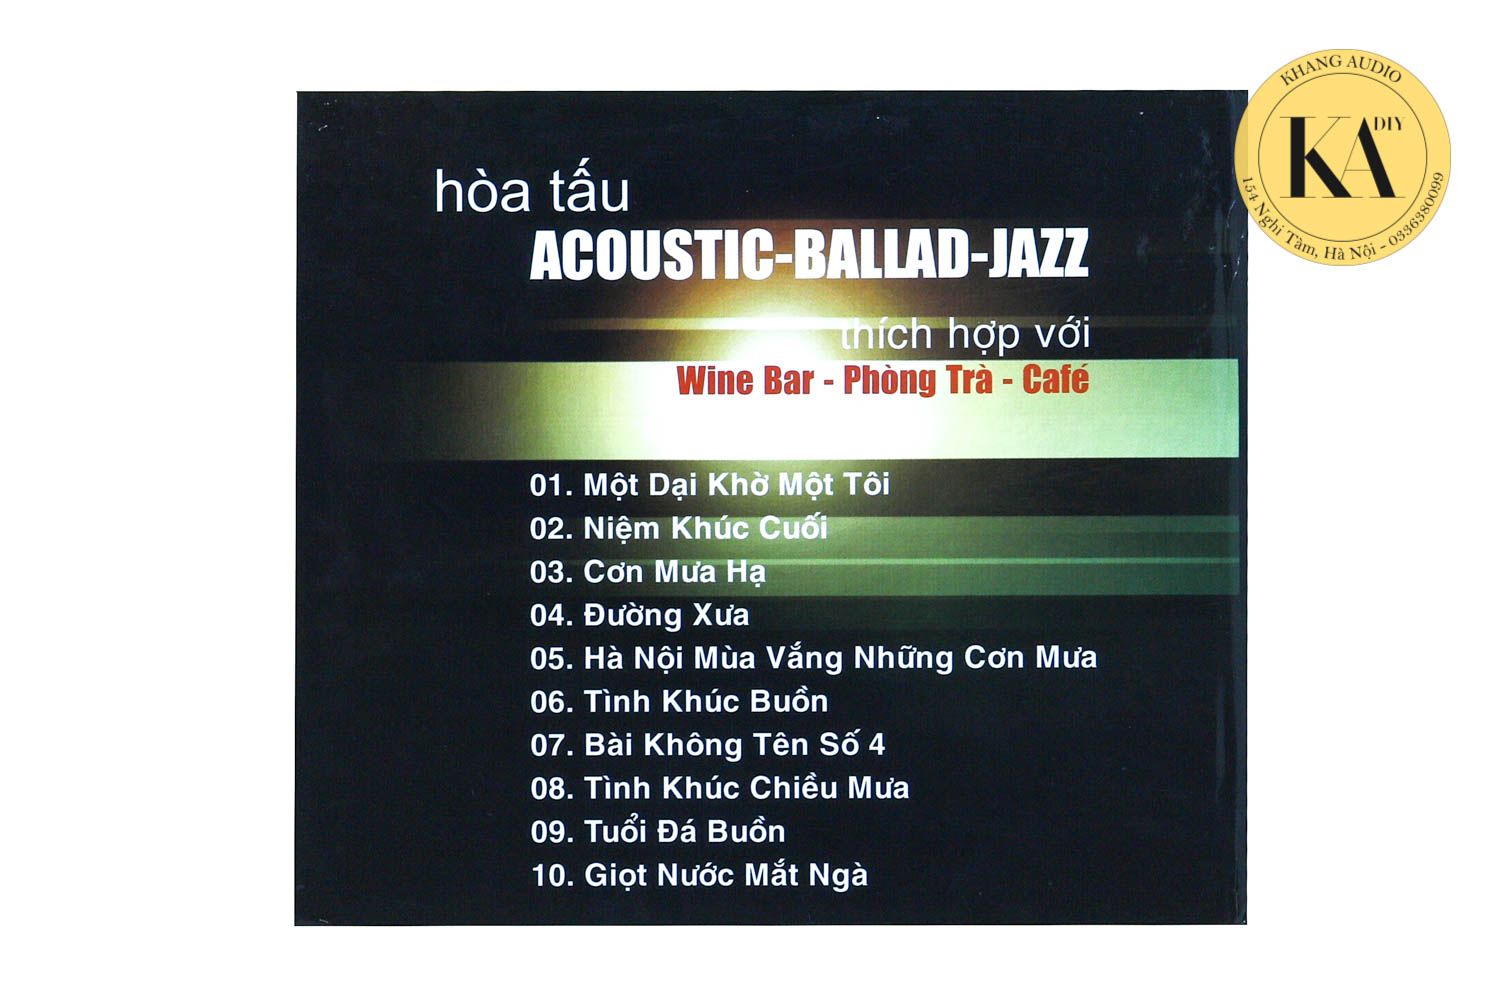 Hoà Tấu Acoustic - Ballad - Jazz Vol. 1